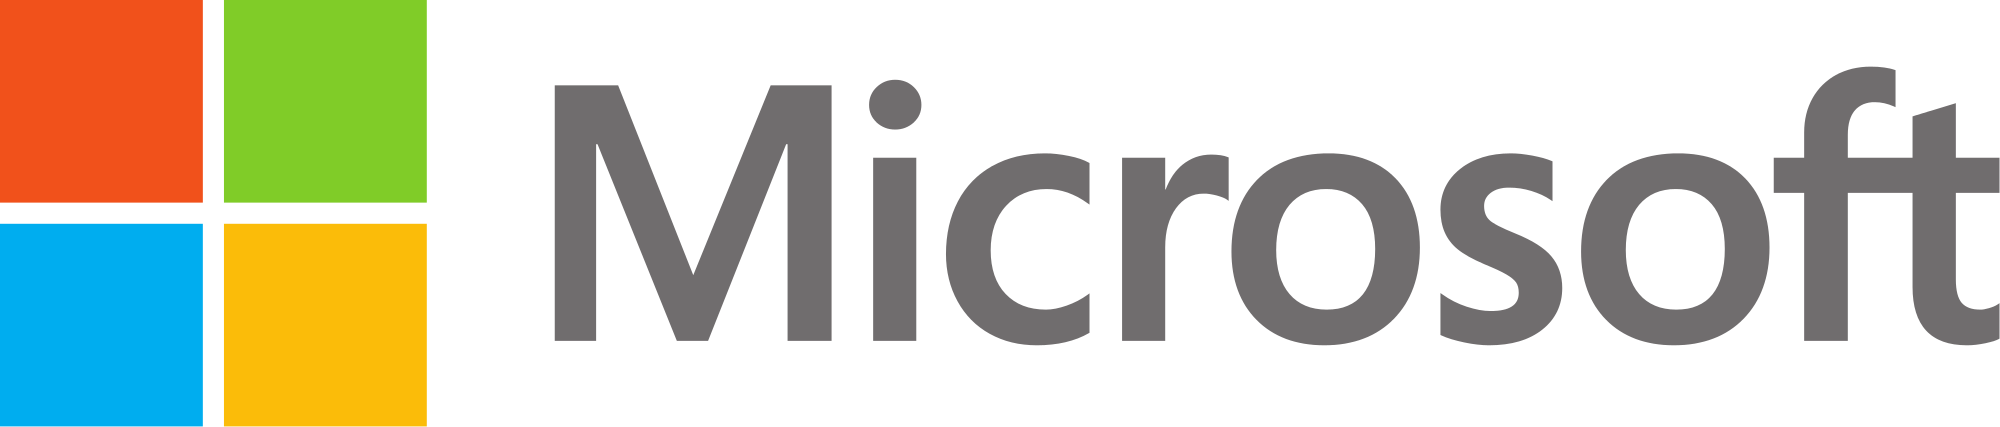 Microsoft logo PNG Imahe